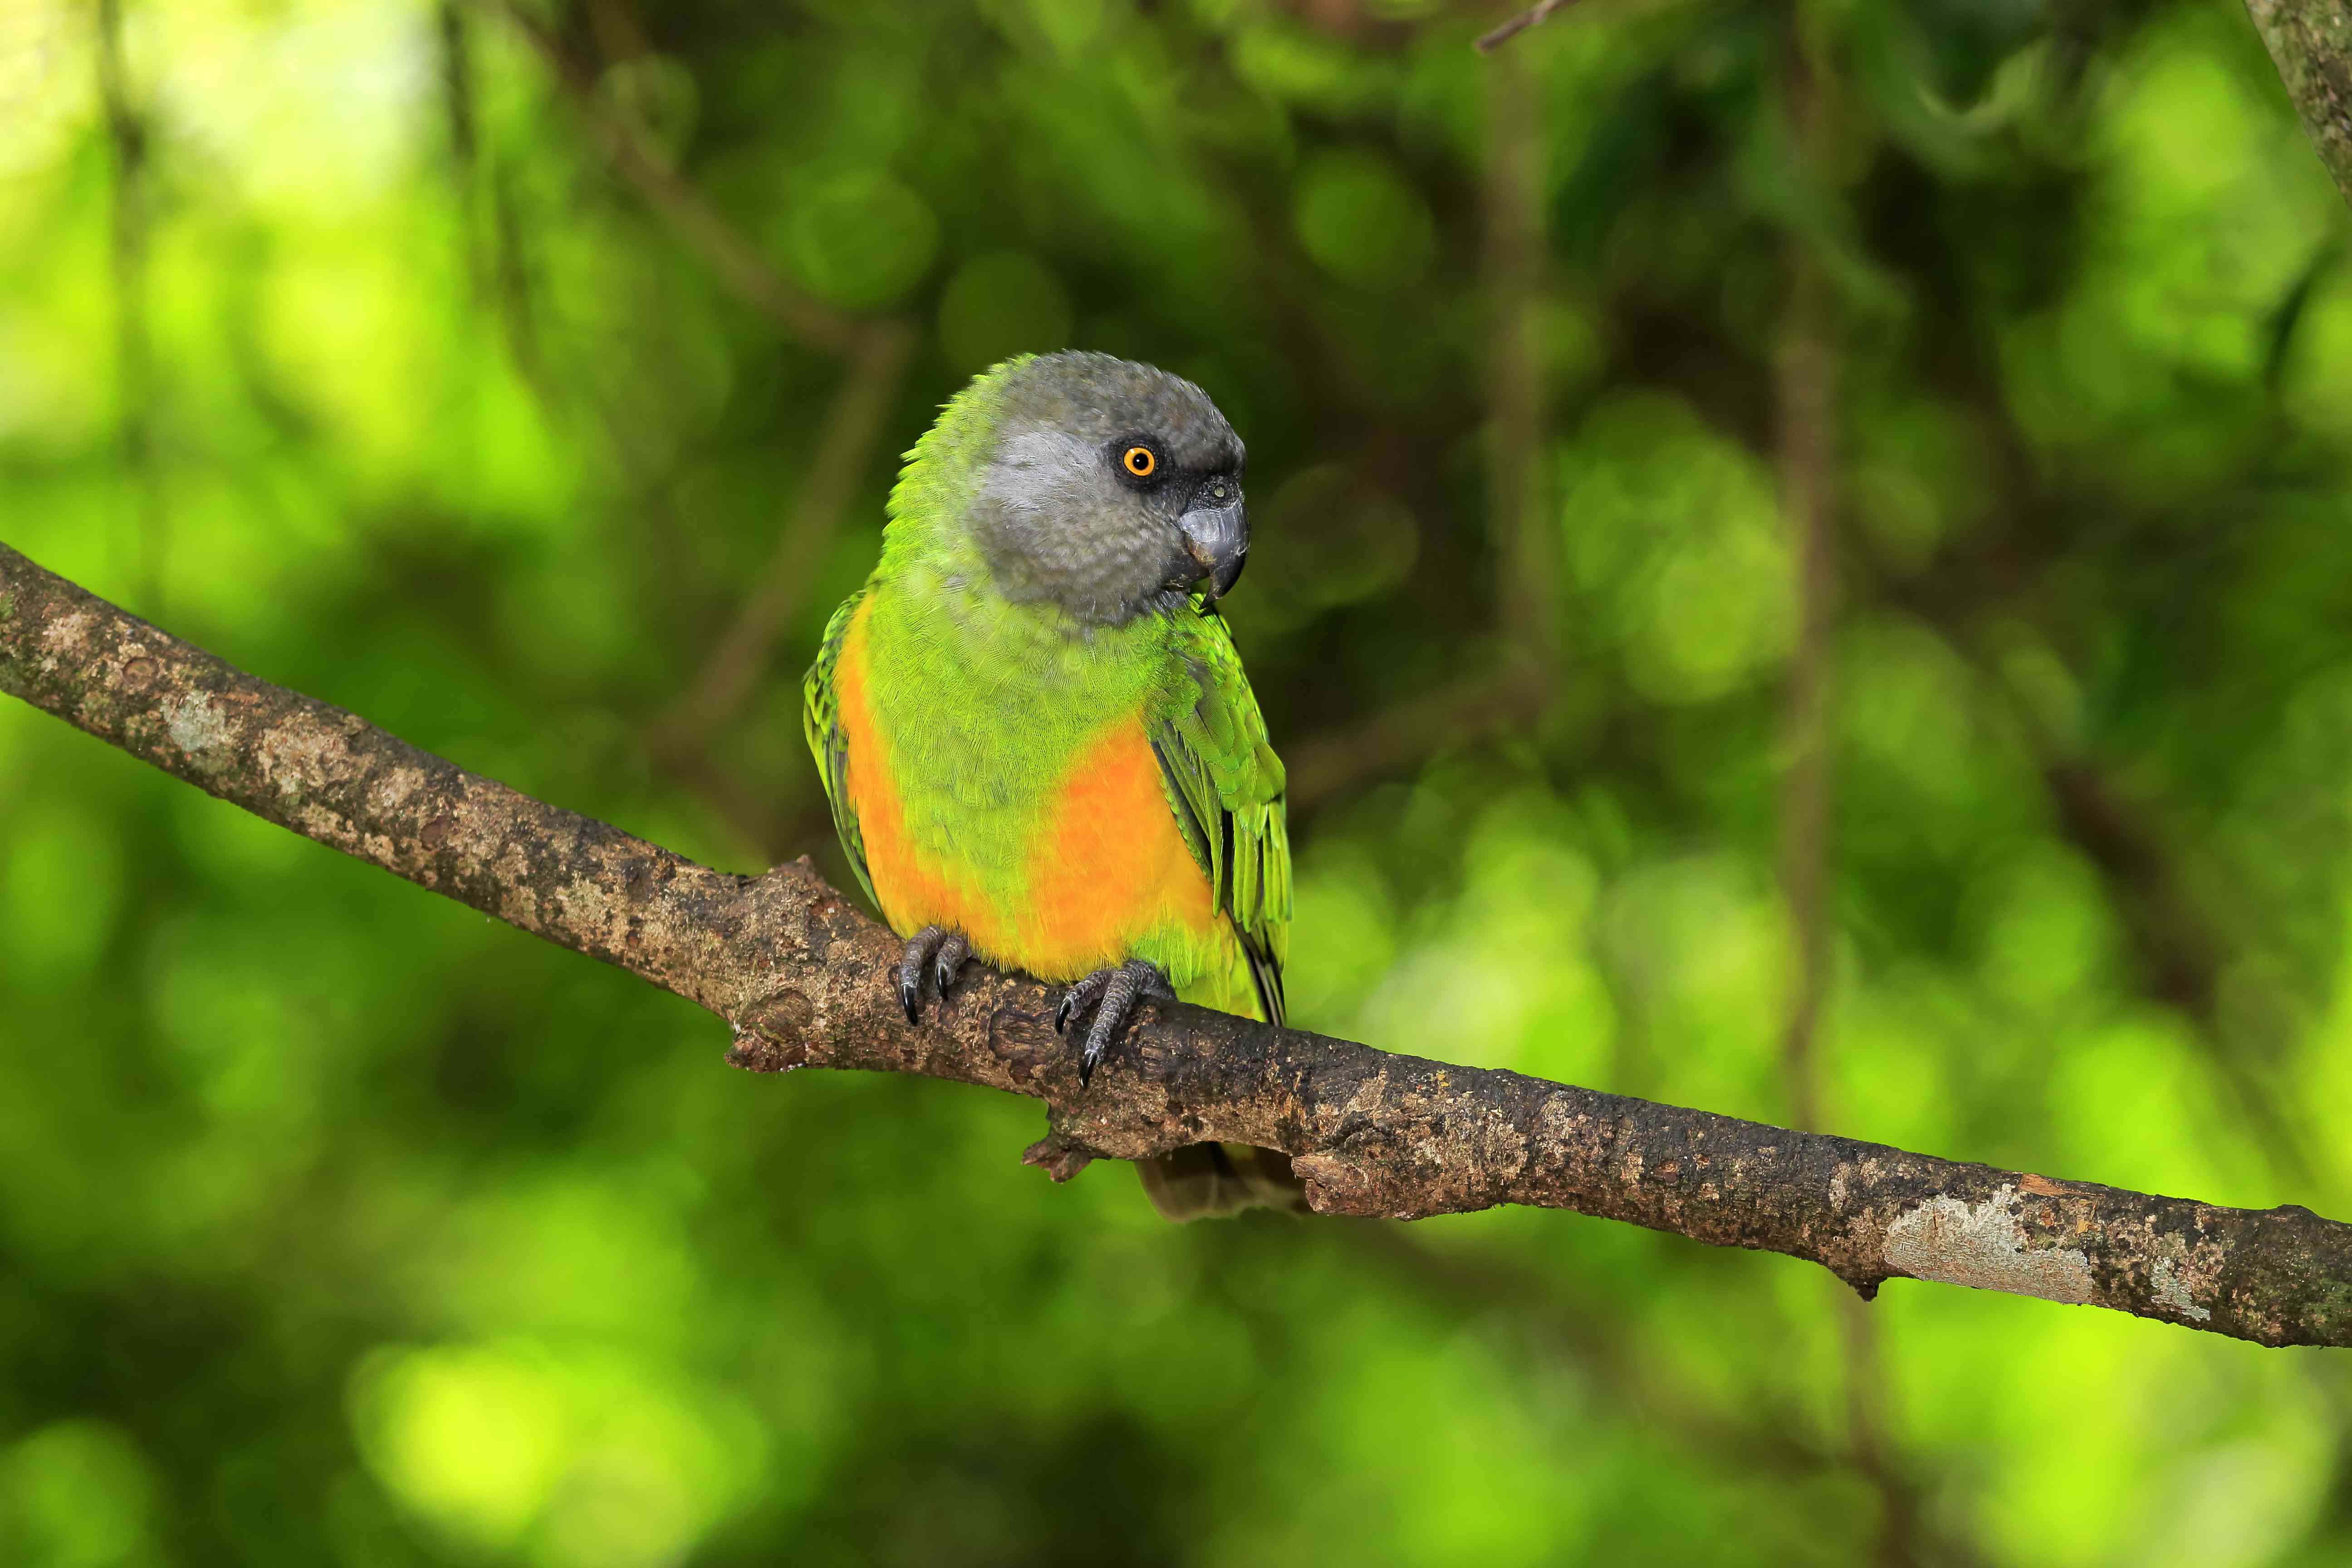 Senegal parrot in a tree